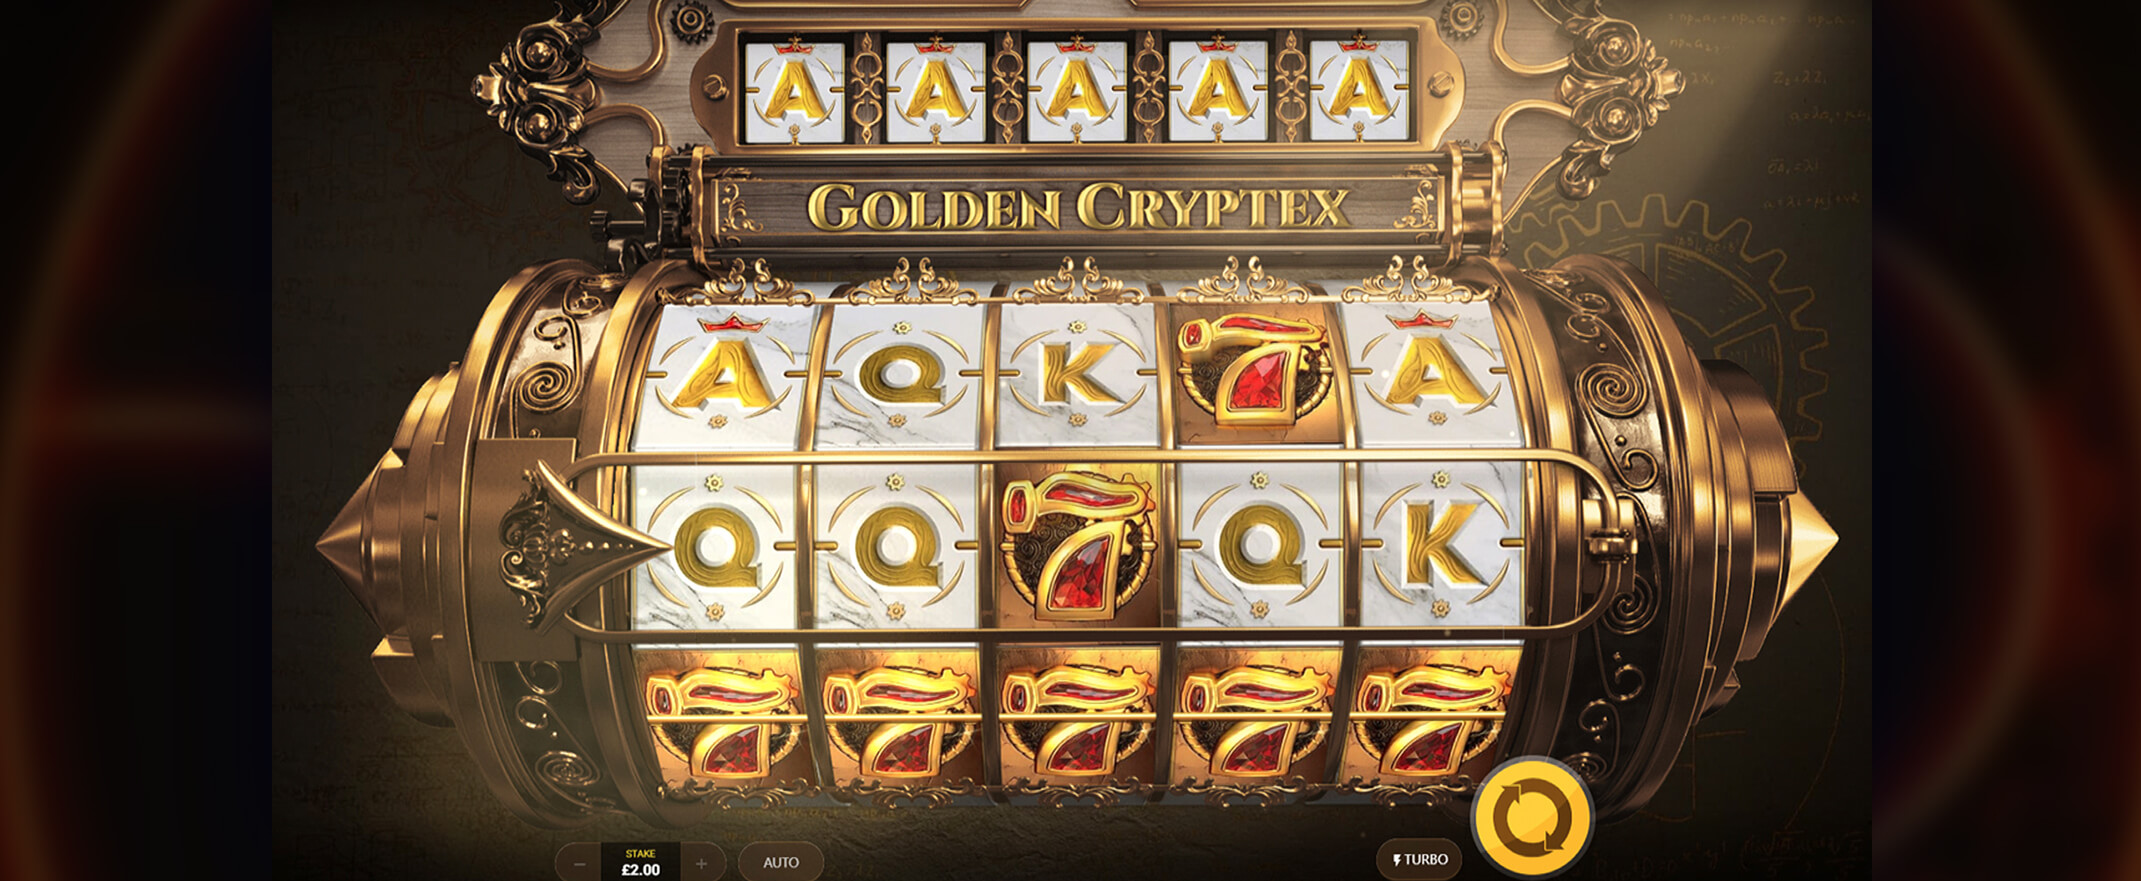 Golden Cryptex Spielautomaten Bewertung